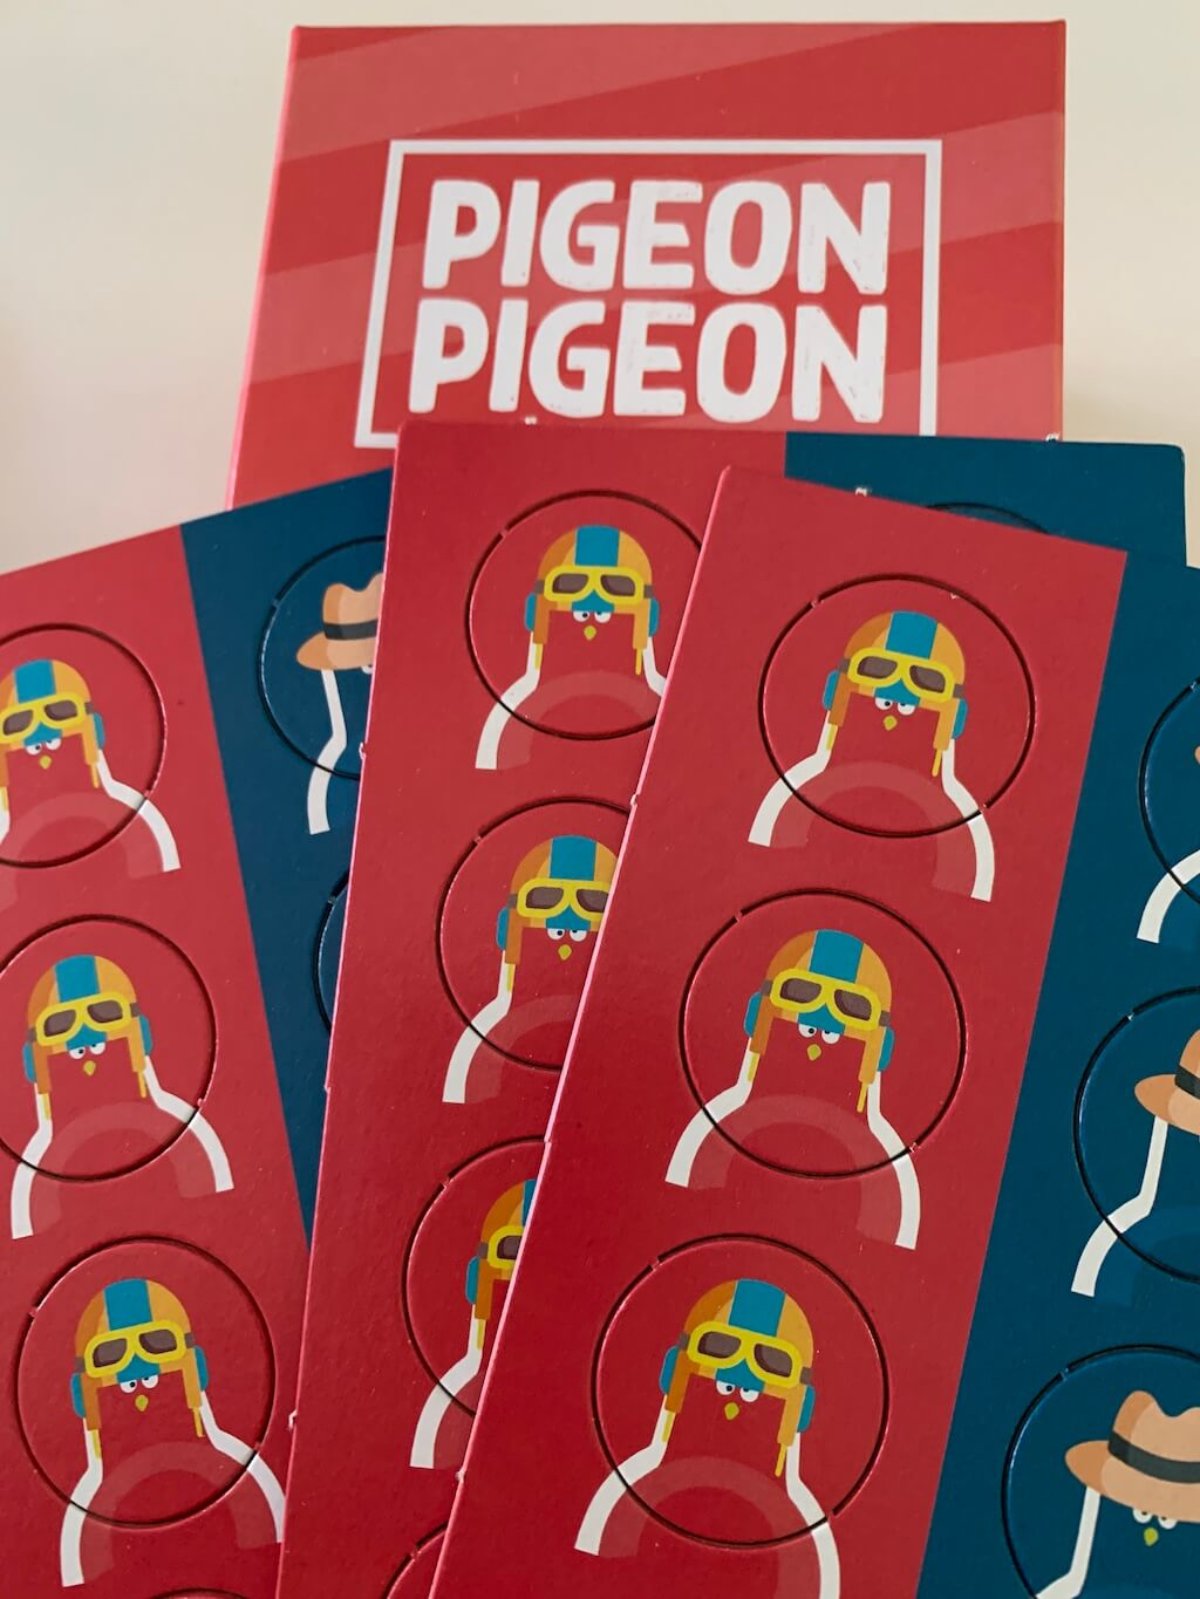 Pigeon Pigeon - Test jeu de société - Akoa Tujou